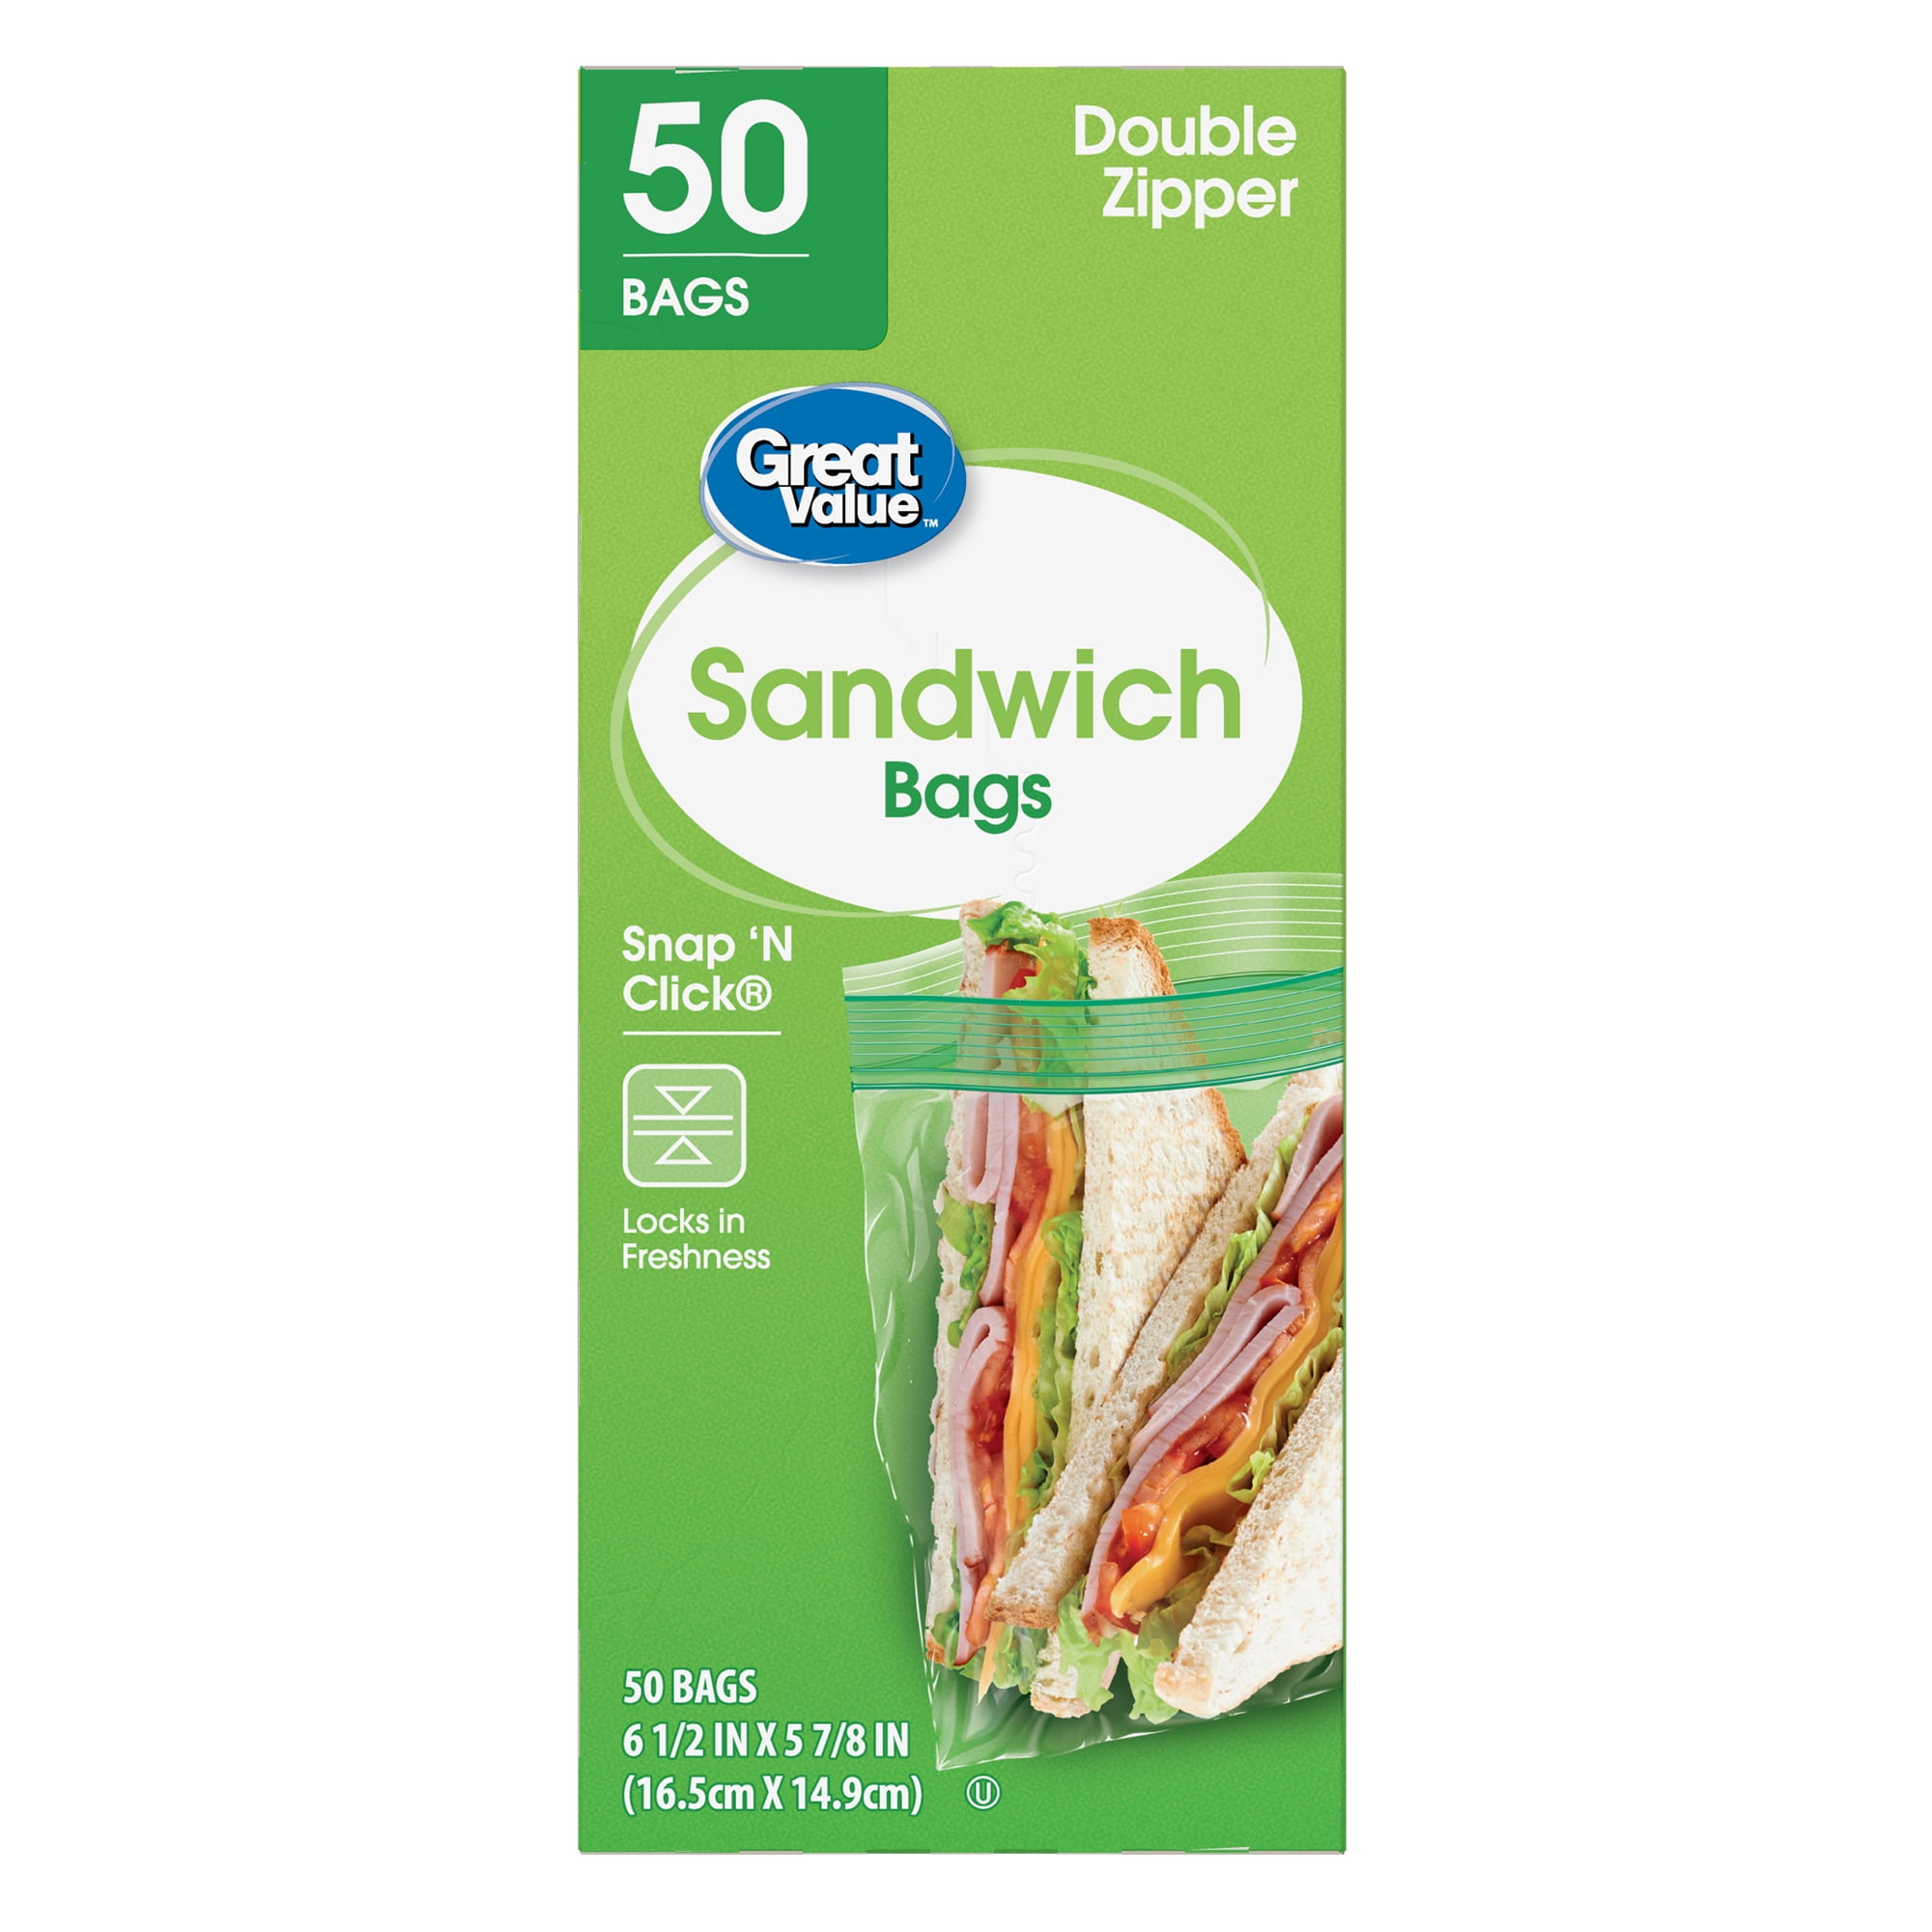 Hefty Slider Sandwich Bags Just $0.50 At Dollar Tree!